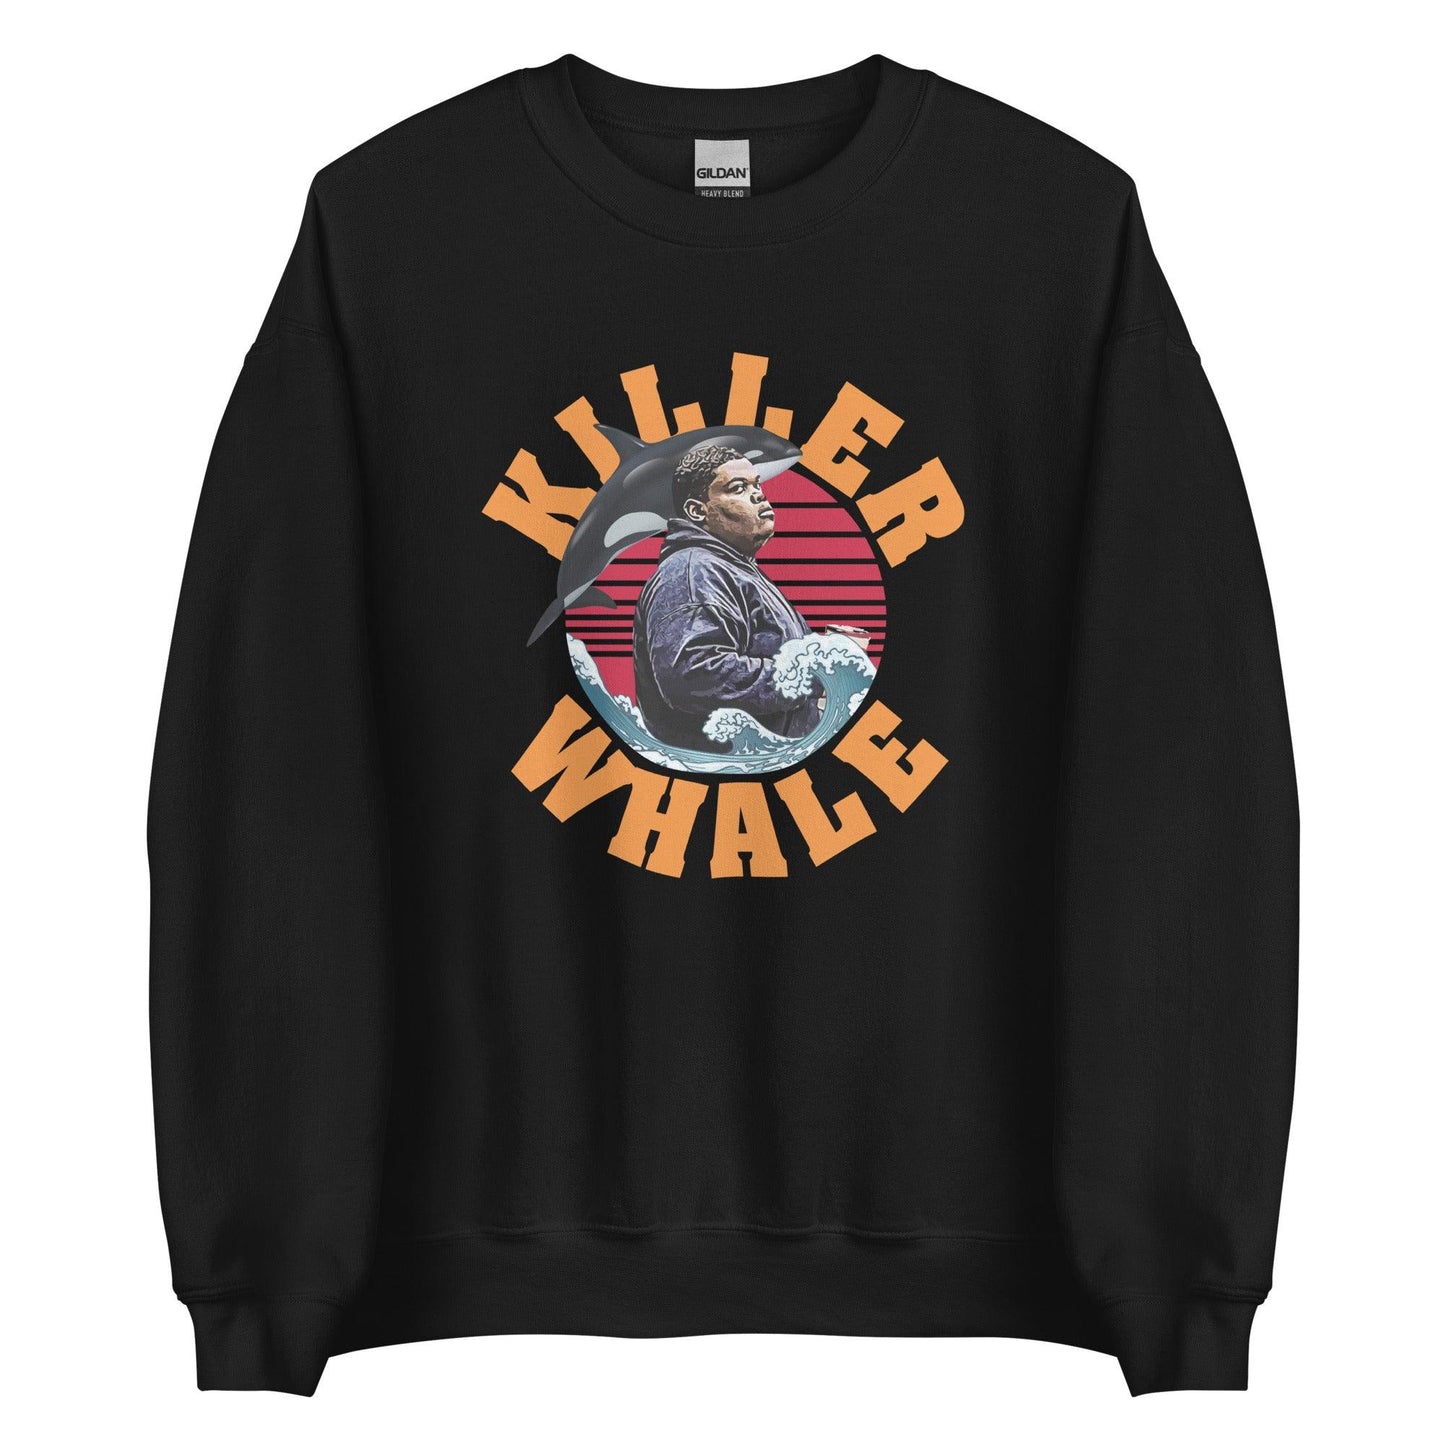 Dieunerst Collin "Killer Whale" Sweatshirt - Fan Arch